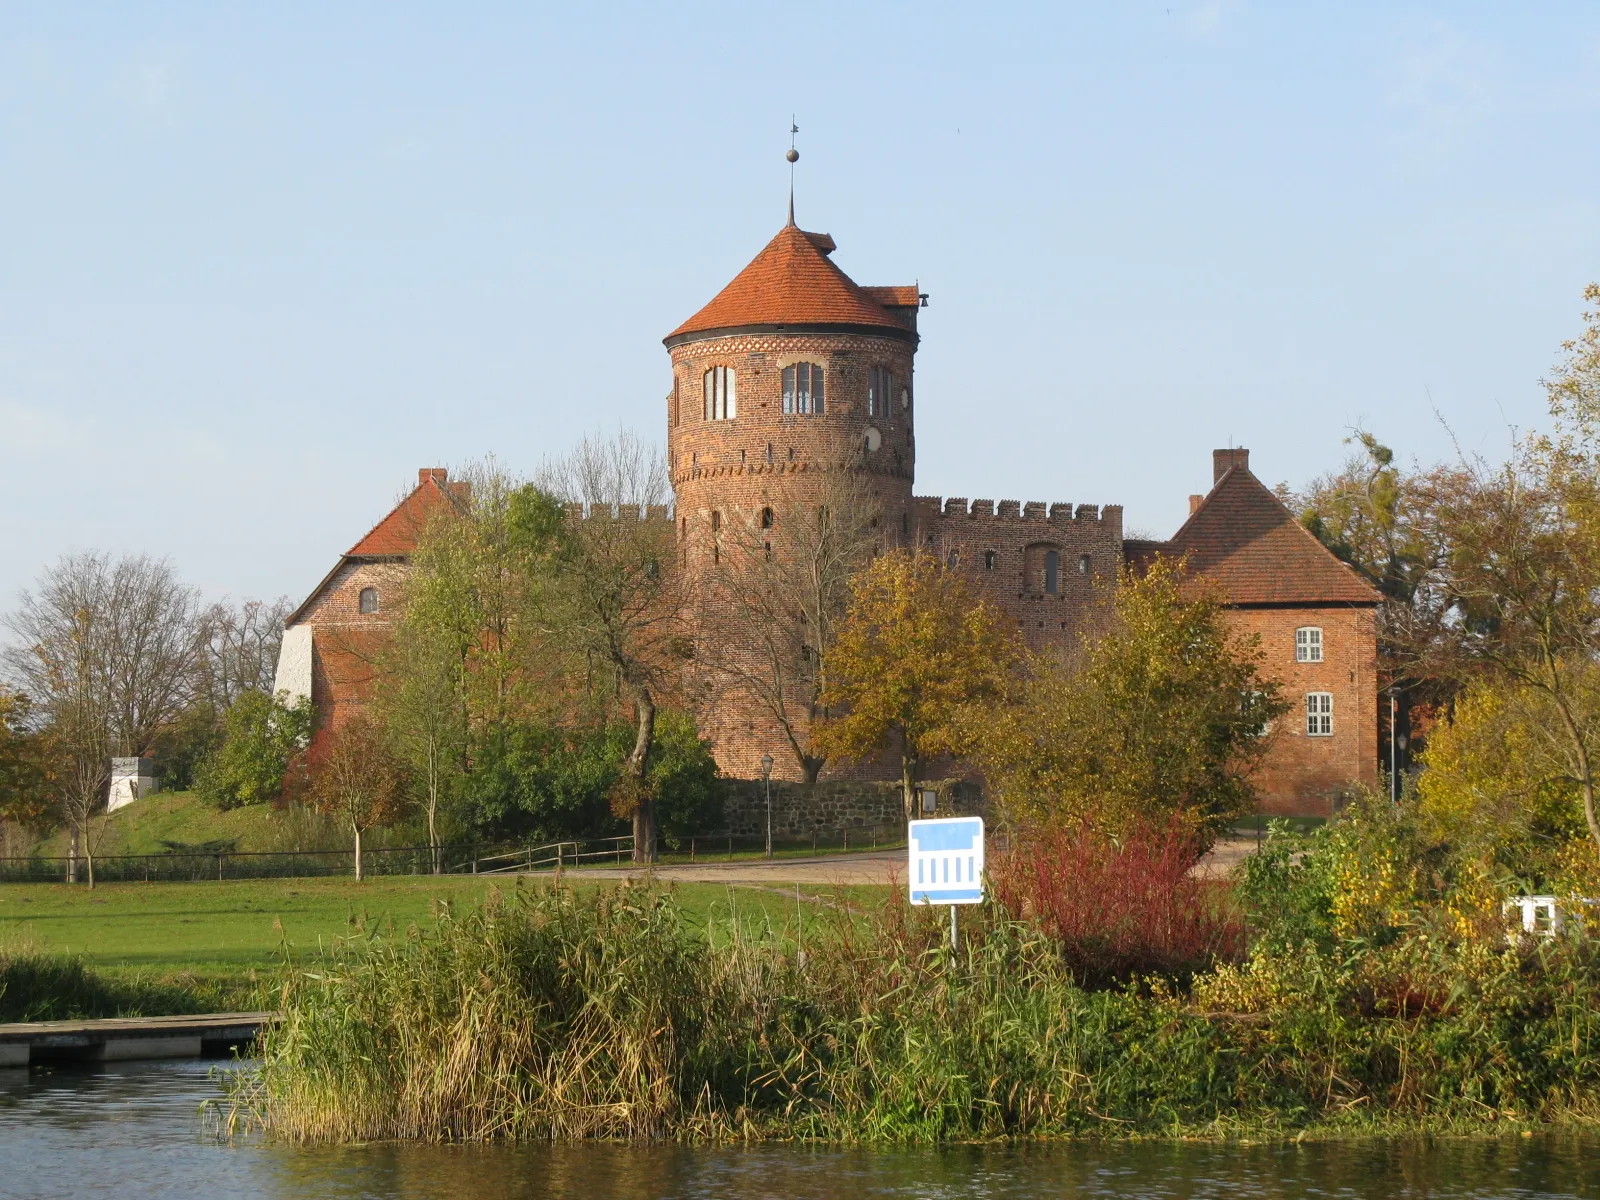 Photo showing: Alte Burg (Old castle) of Neustadt-Glewe, Germany